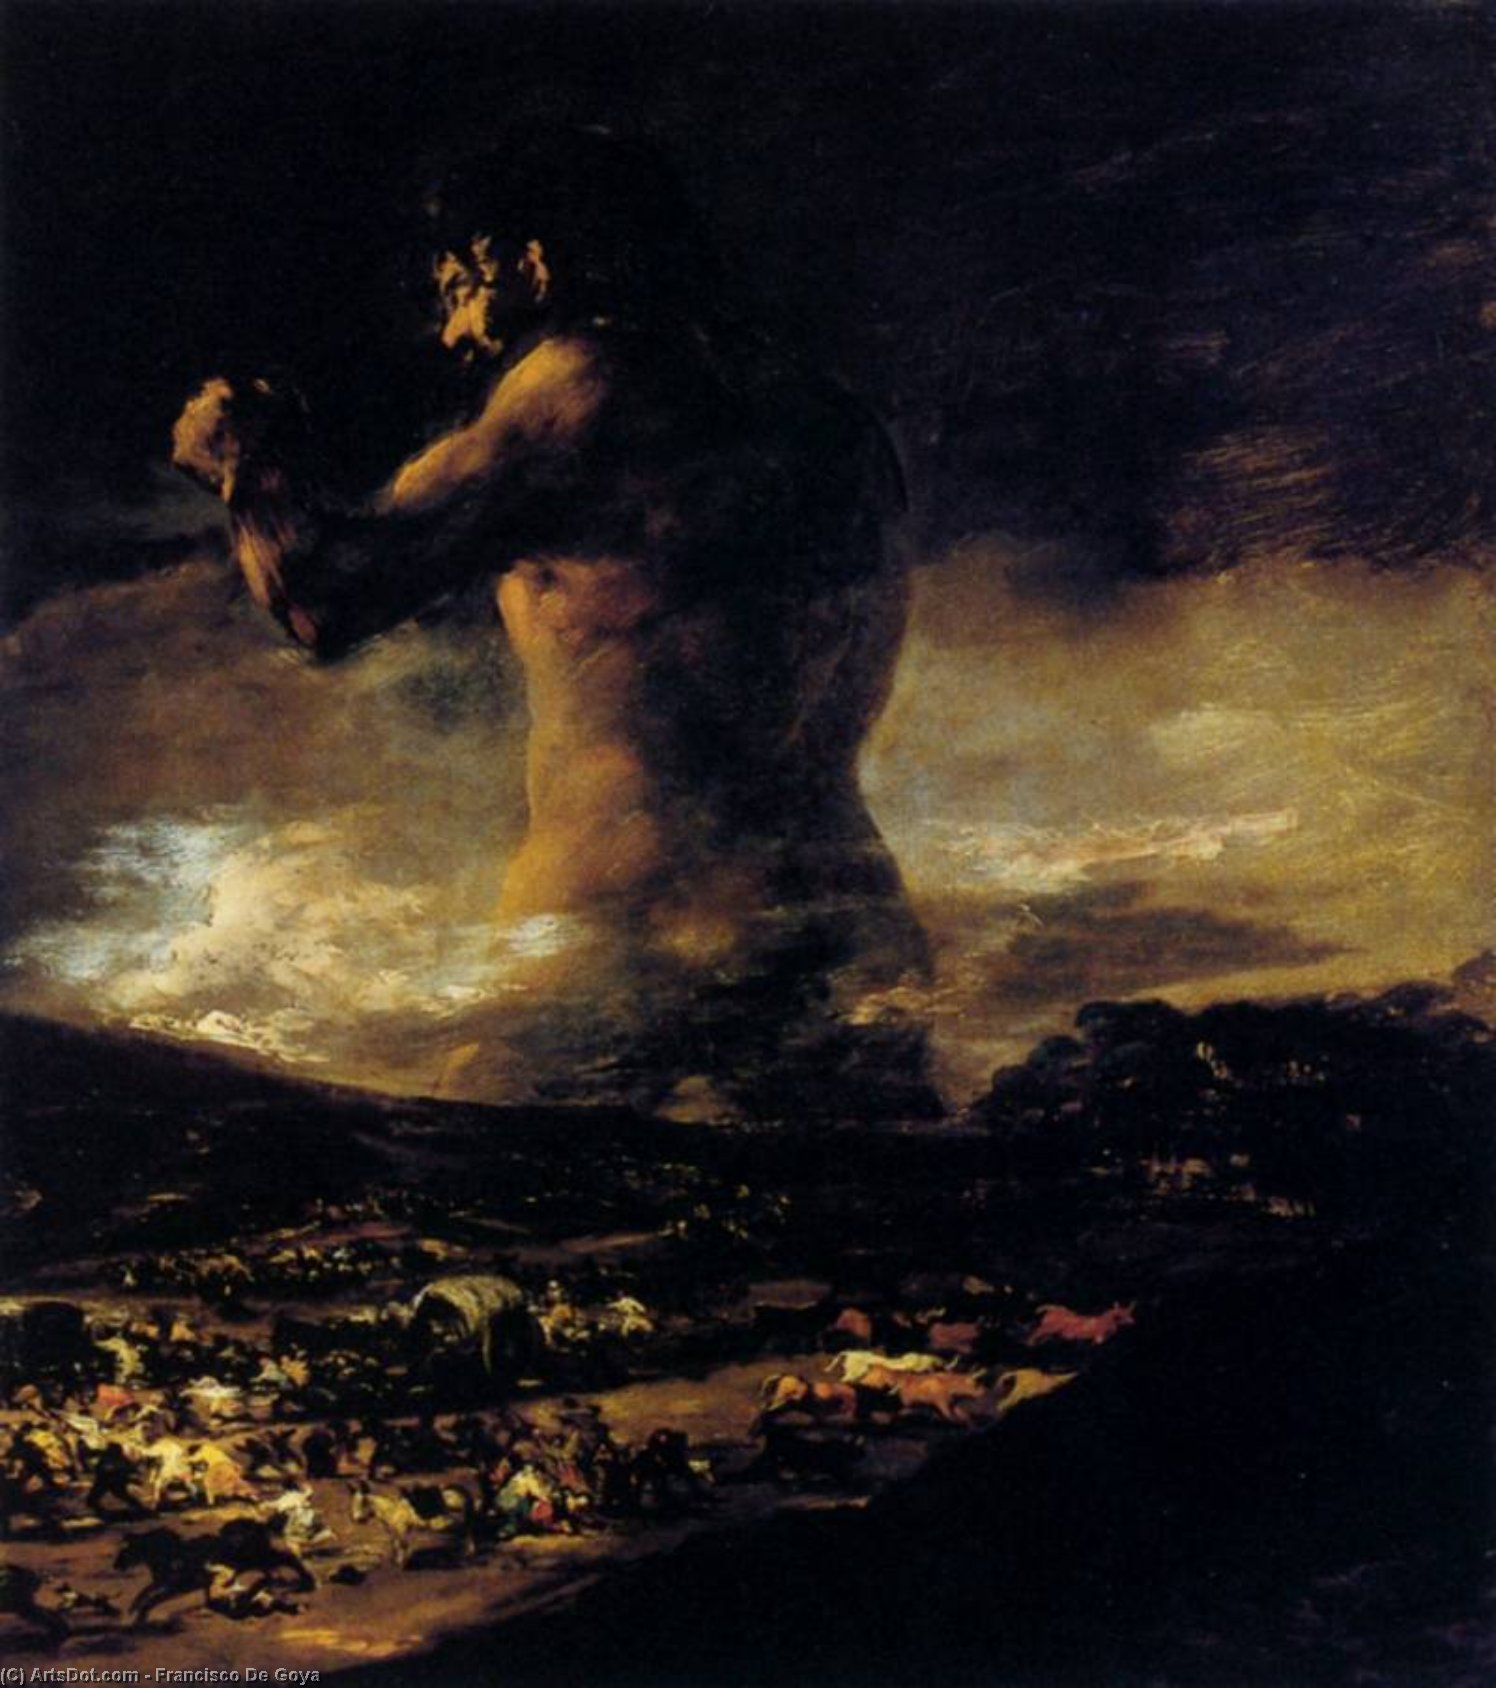 Wikioo.org - สารานุกรมวิจิตรศิลป์ - จิตรกรรม Francisco De Goya - the colossus